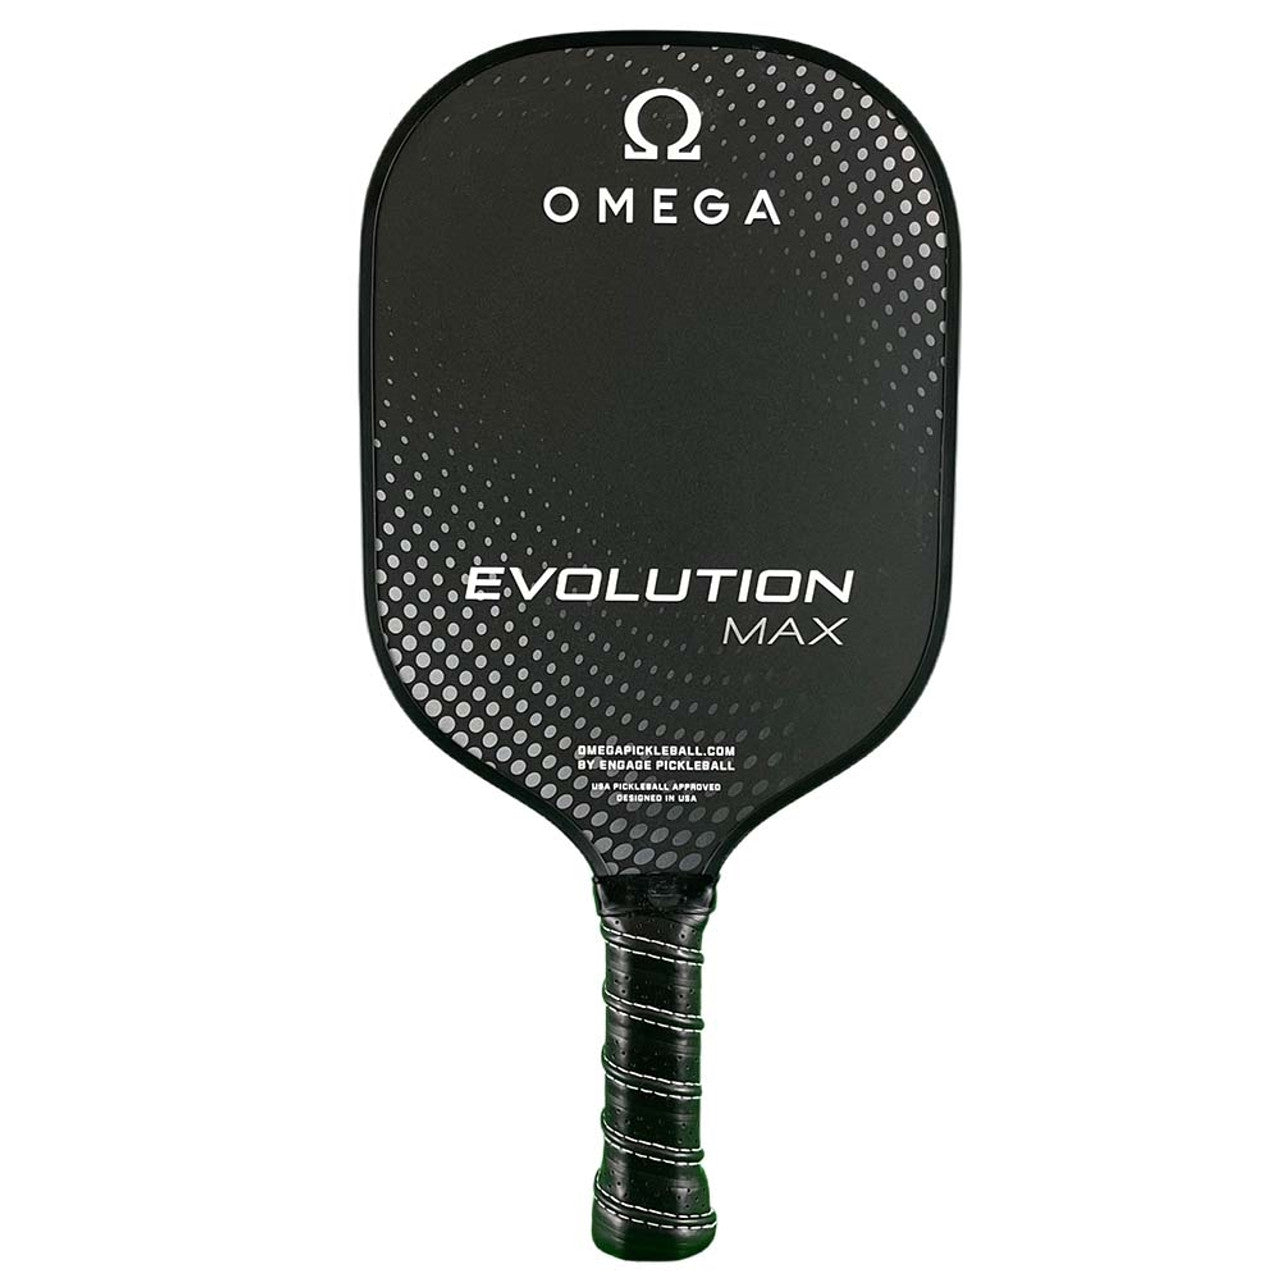 Engage Omega Evolution Max Carbon Fiber Pickleball Paddle